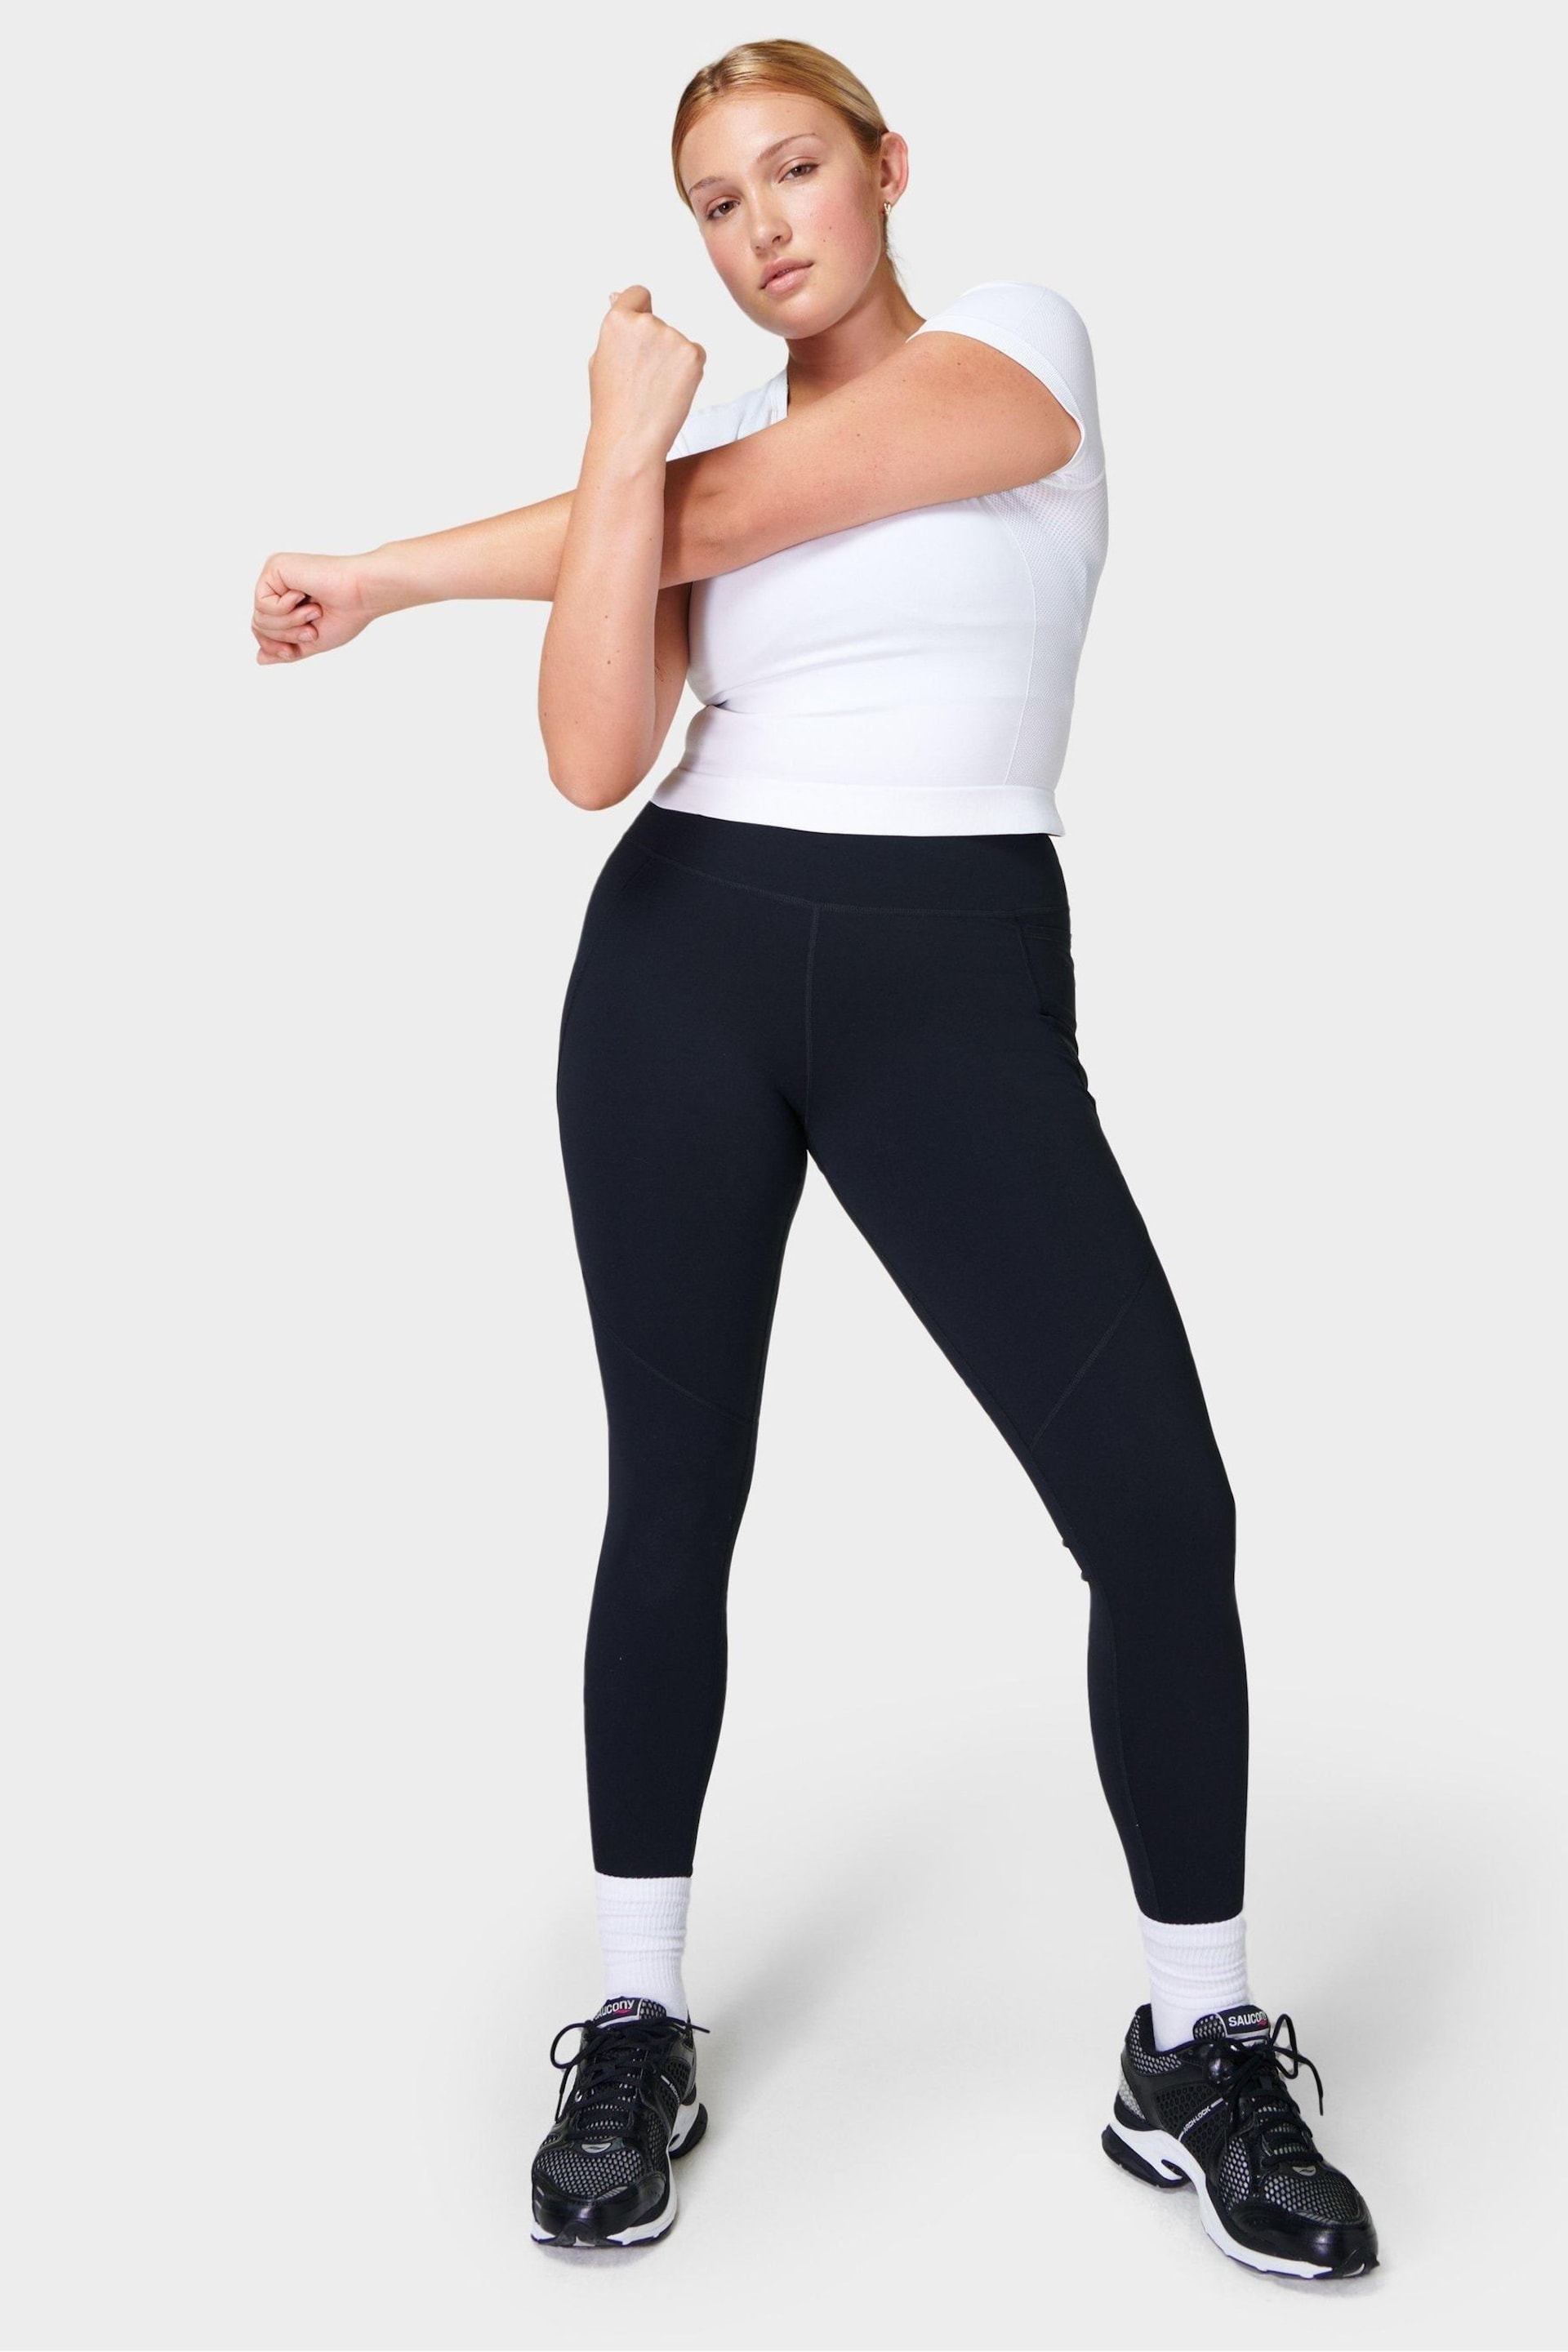 Sweaty Betty Black Full Length Power Workout Leggings - Image 5 of 10